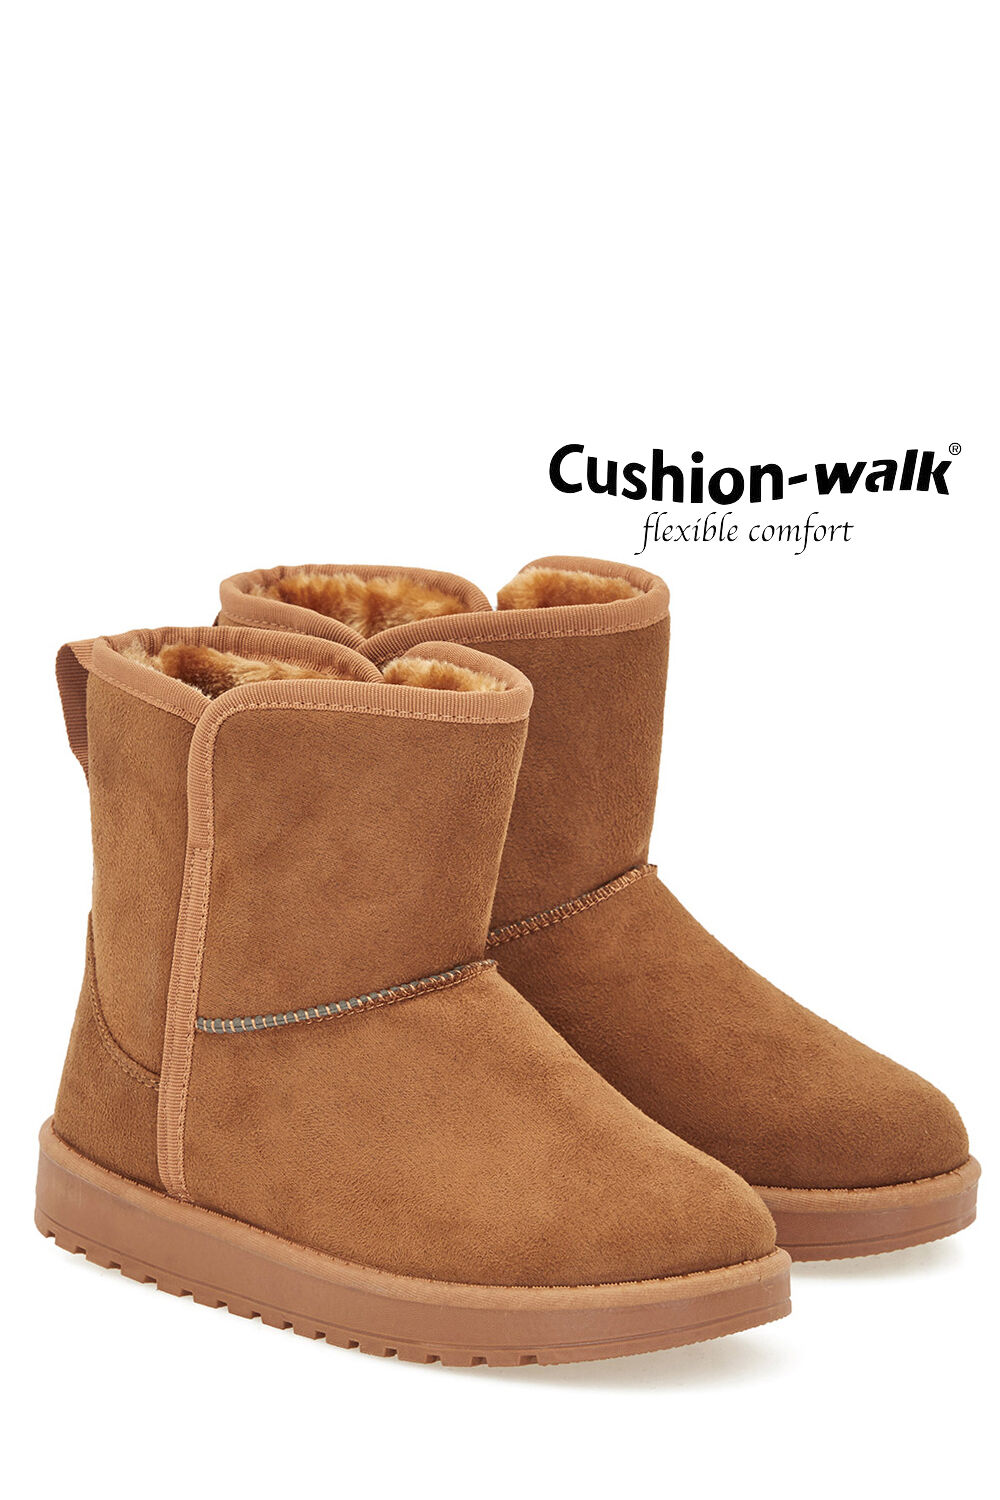 cushion walk ankle boots uk